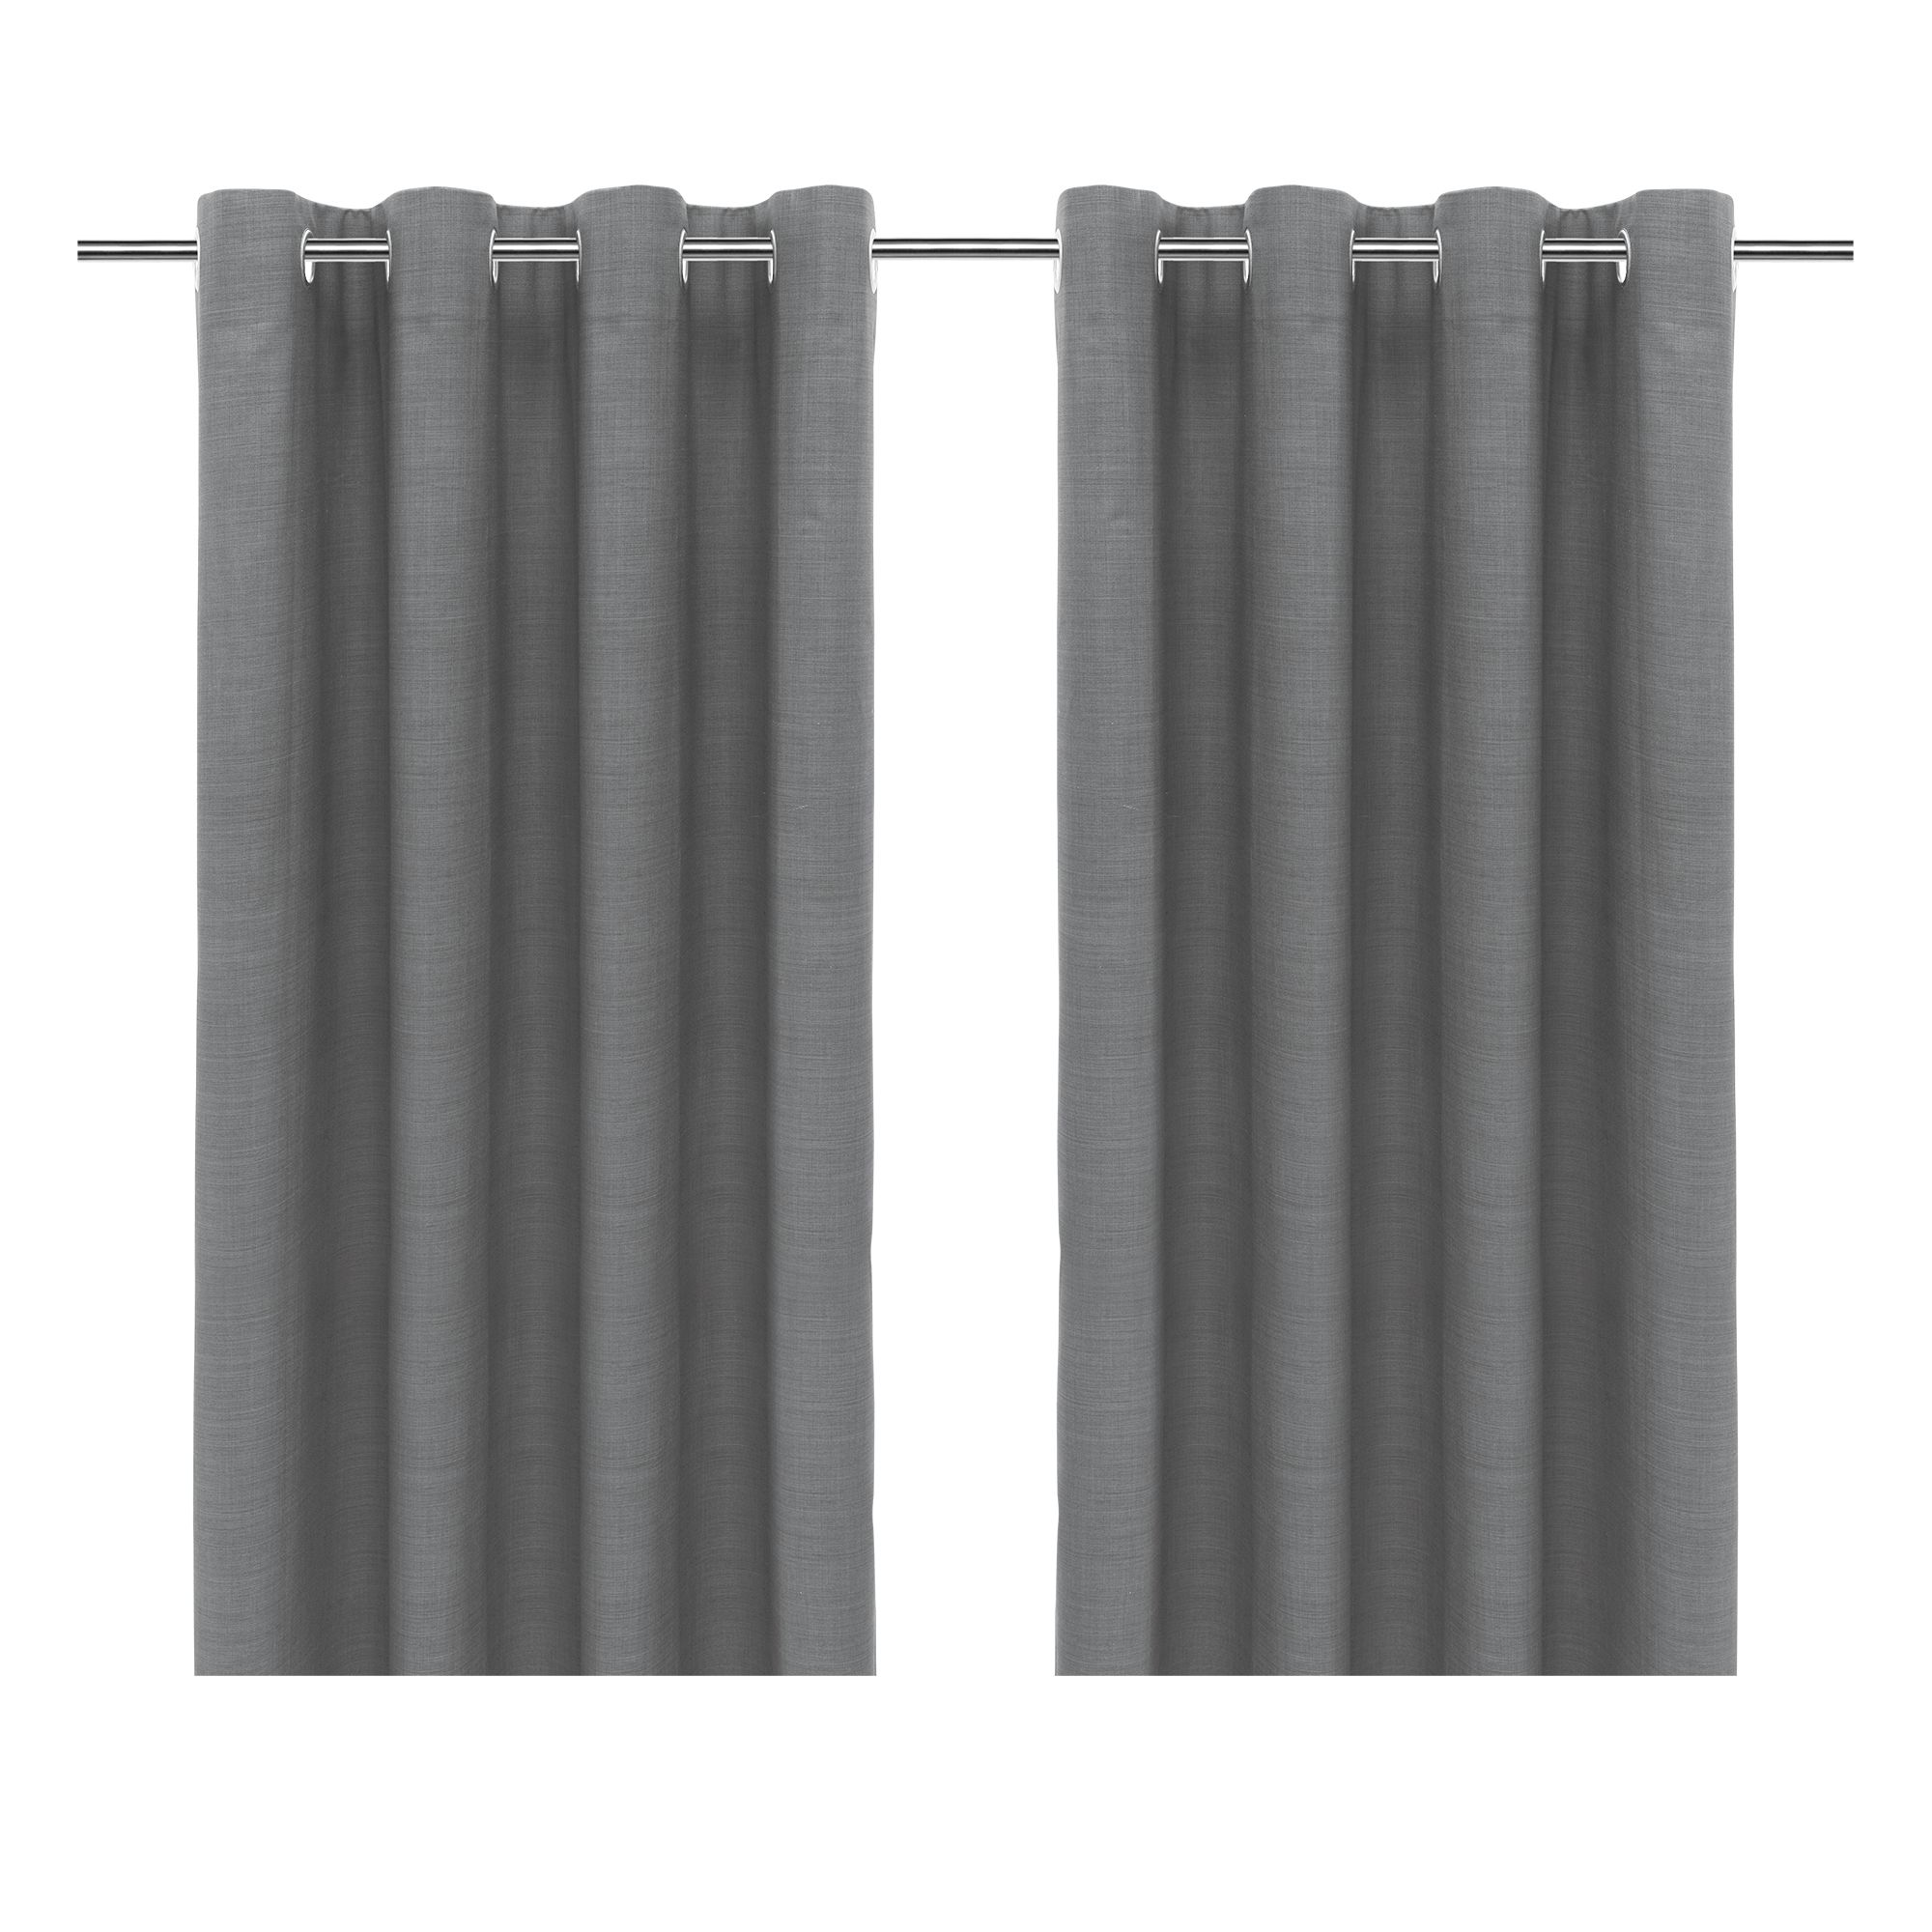 Glend Grey Plain woven Blackout & thermal Eyelet Curtain (W)117cm (L)137cm, Pair